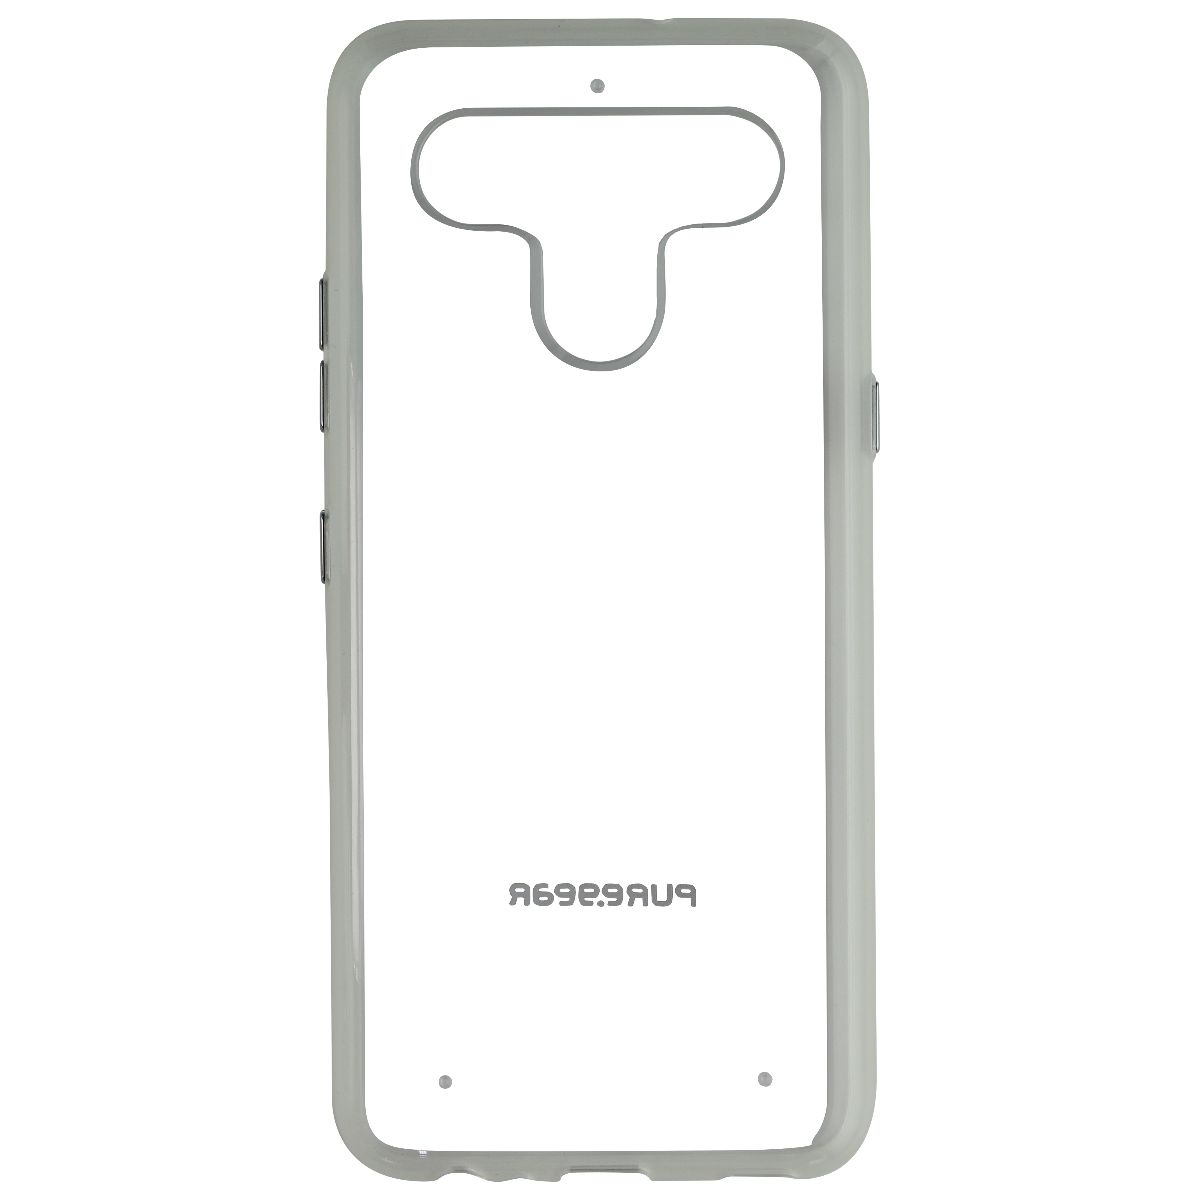 PureGear Slim Shell Series Hard Case For LG K41S (2020 Model) - Clear (Refurbished)